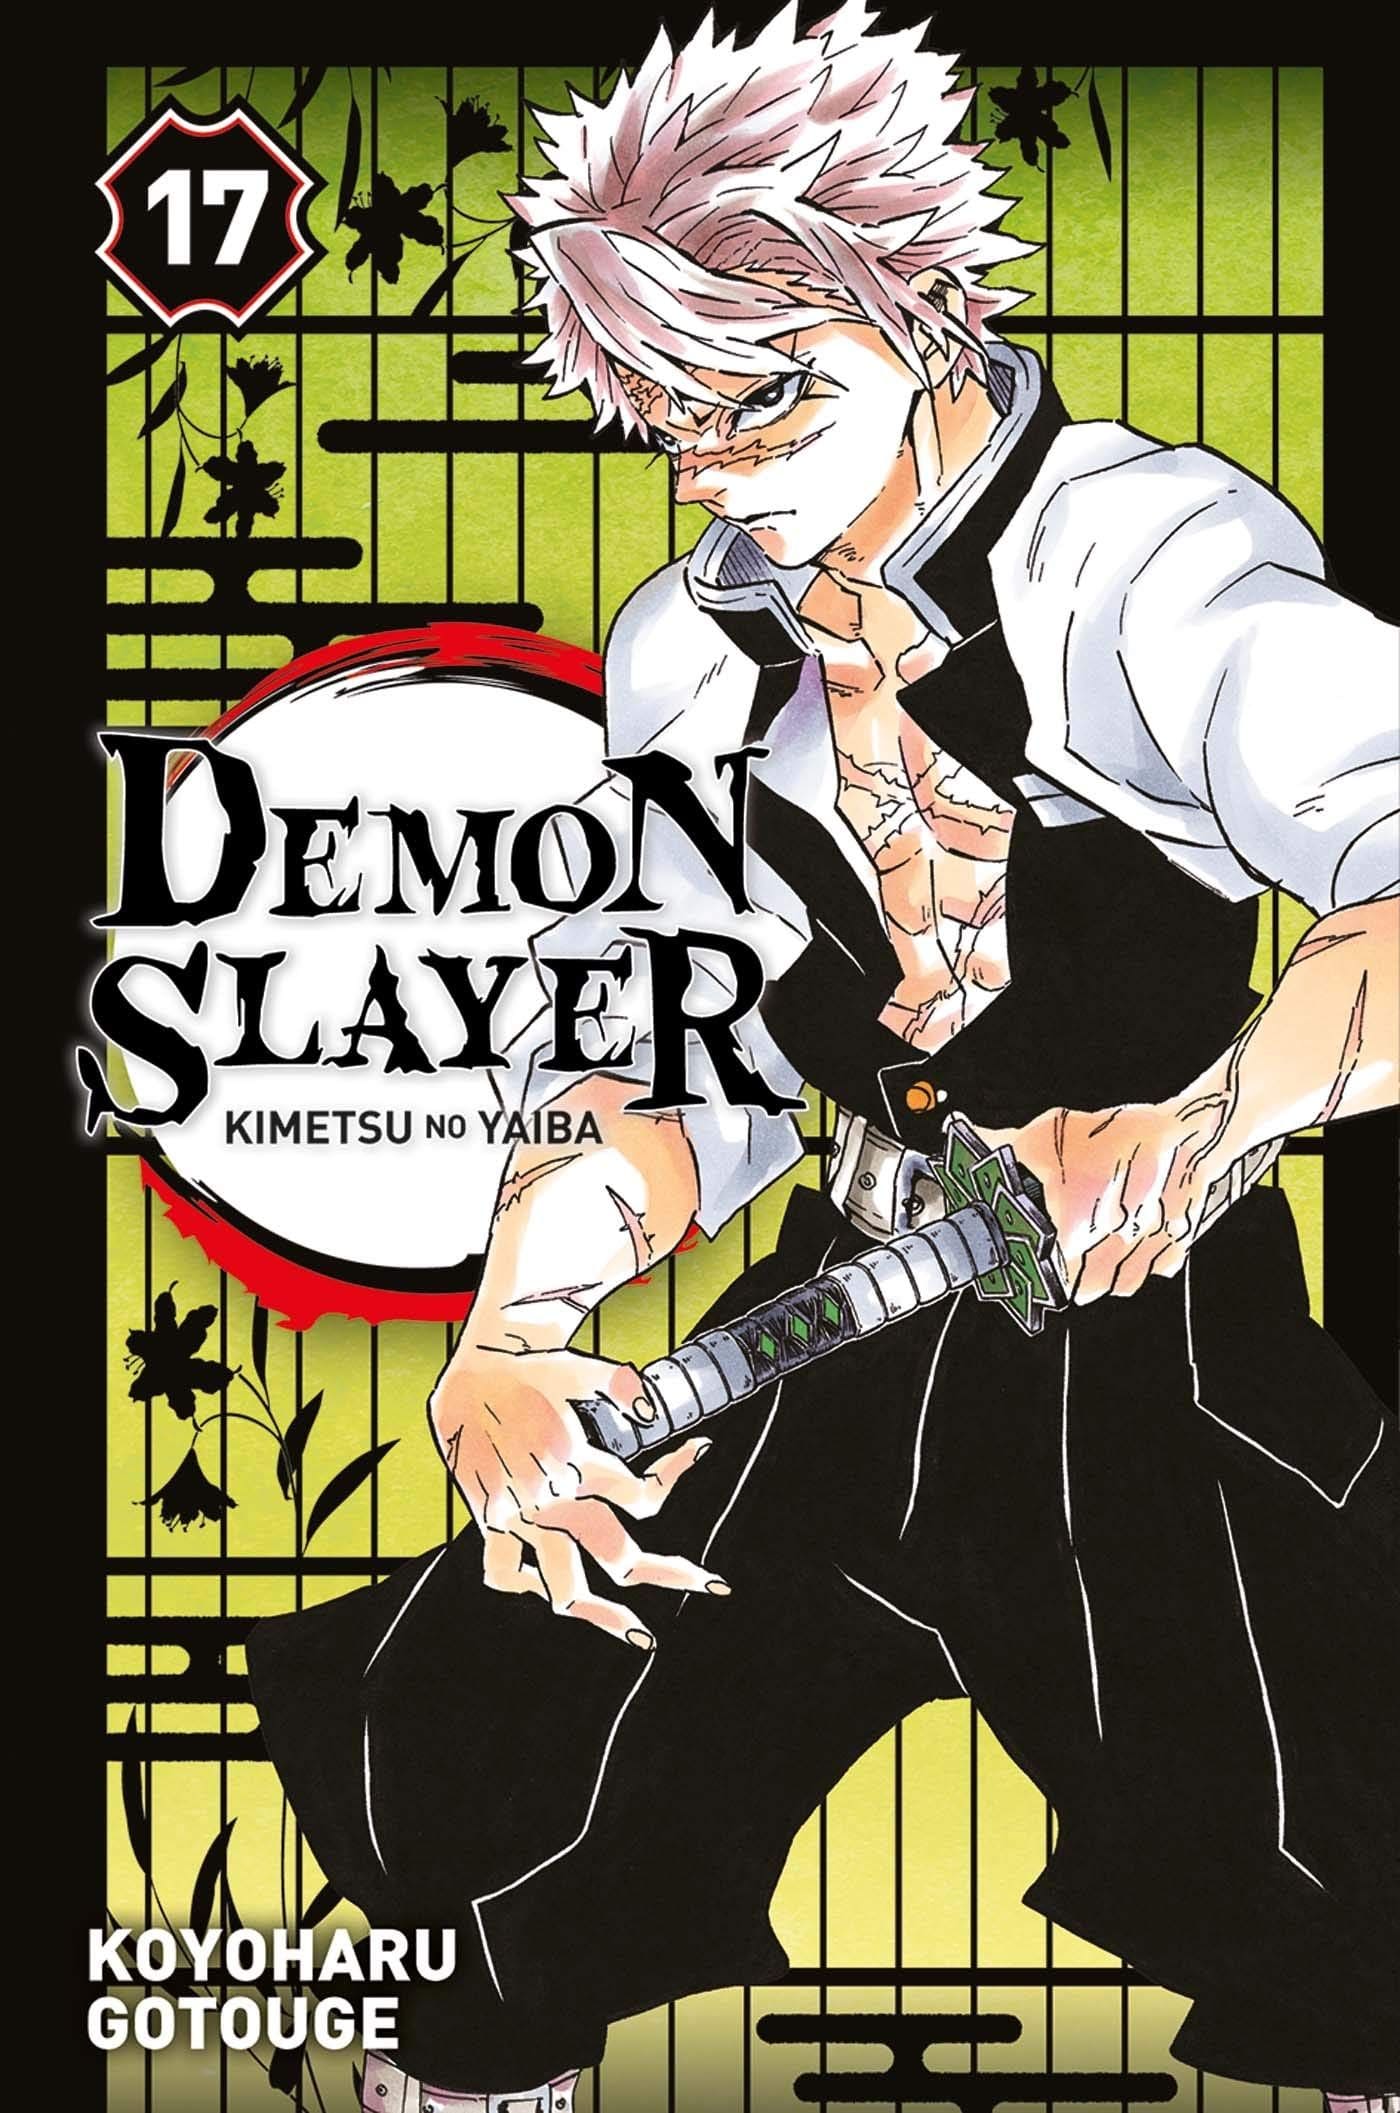 Demon slayer read online